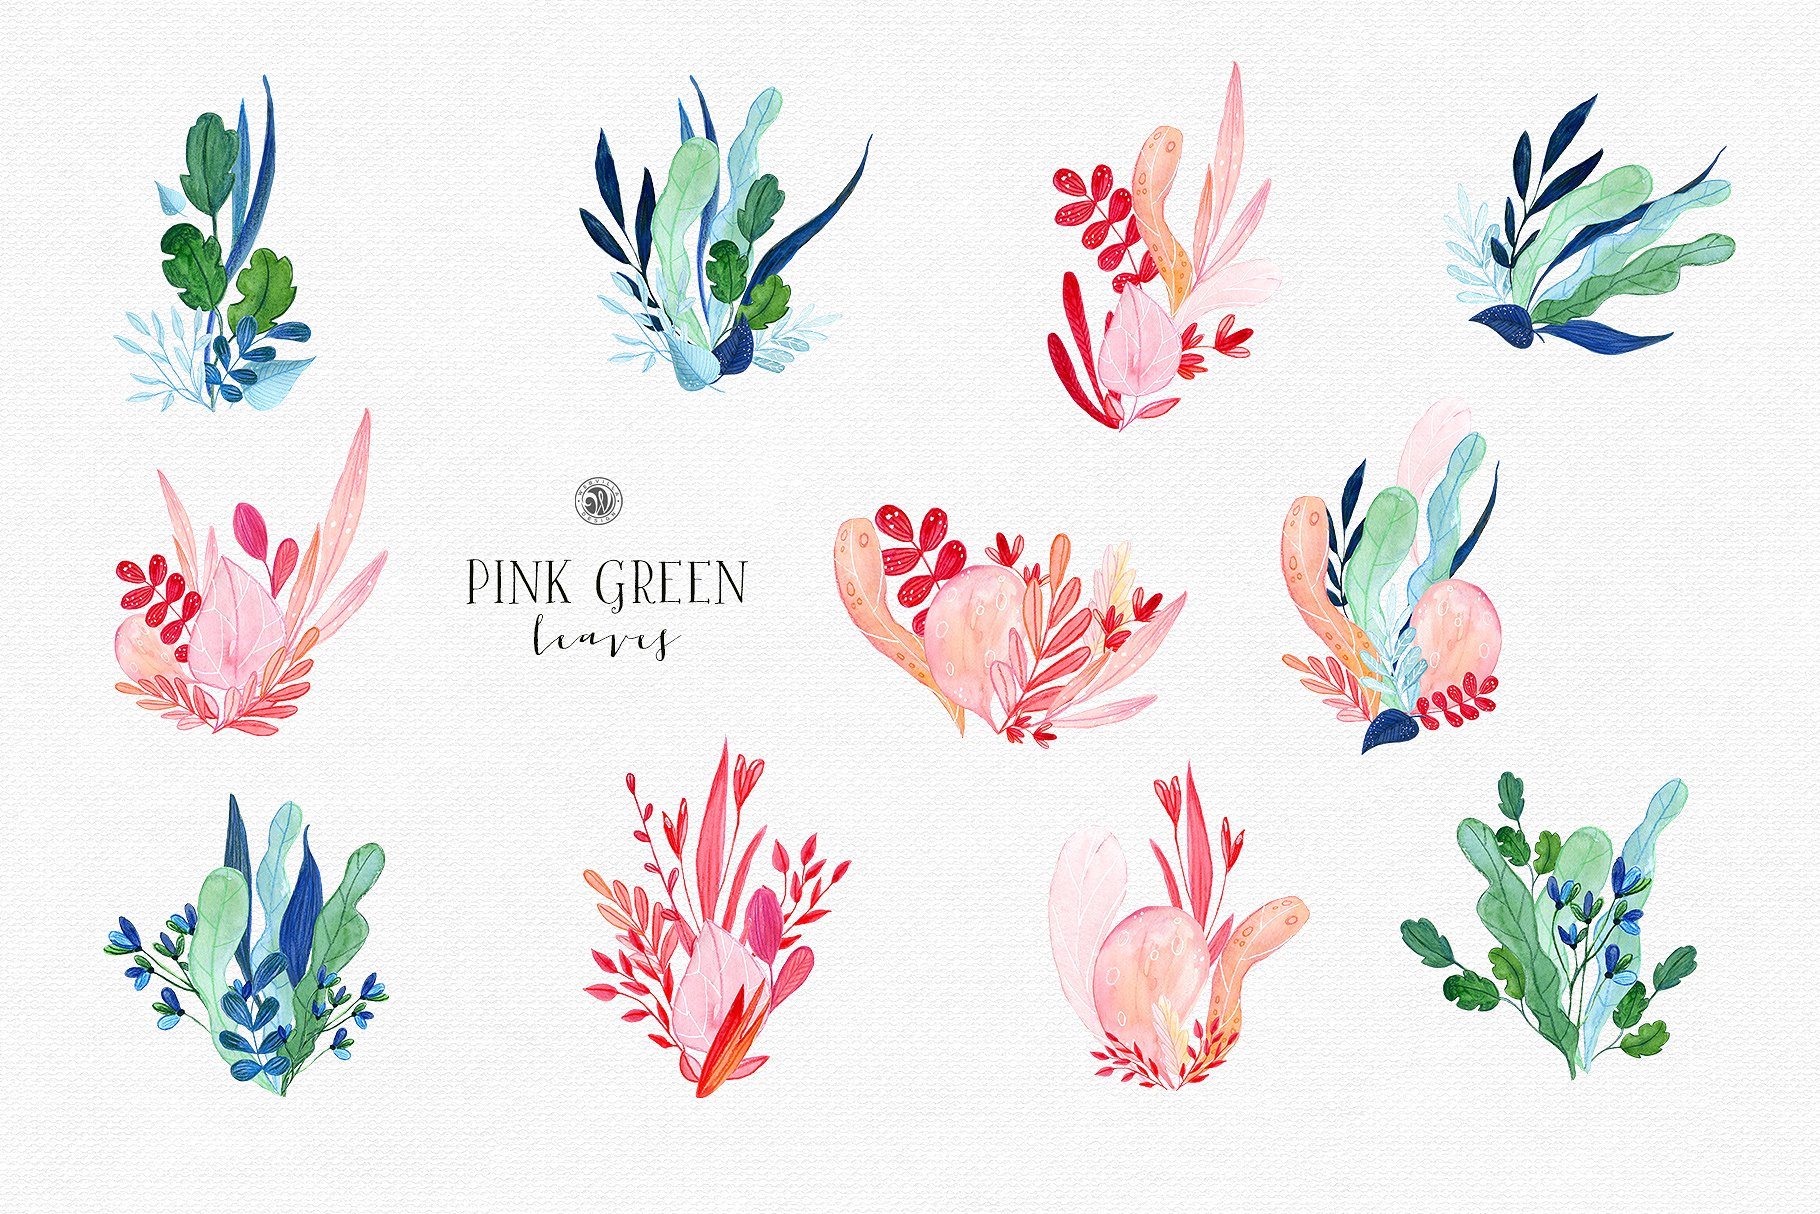 水彩手绘粉绿色叶子插画合集 Pink Green Leaves插图7